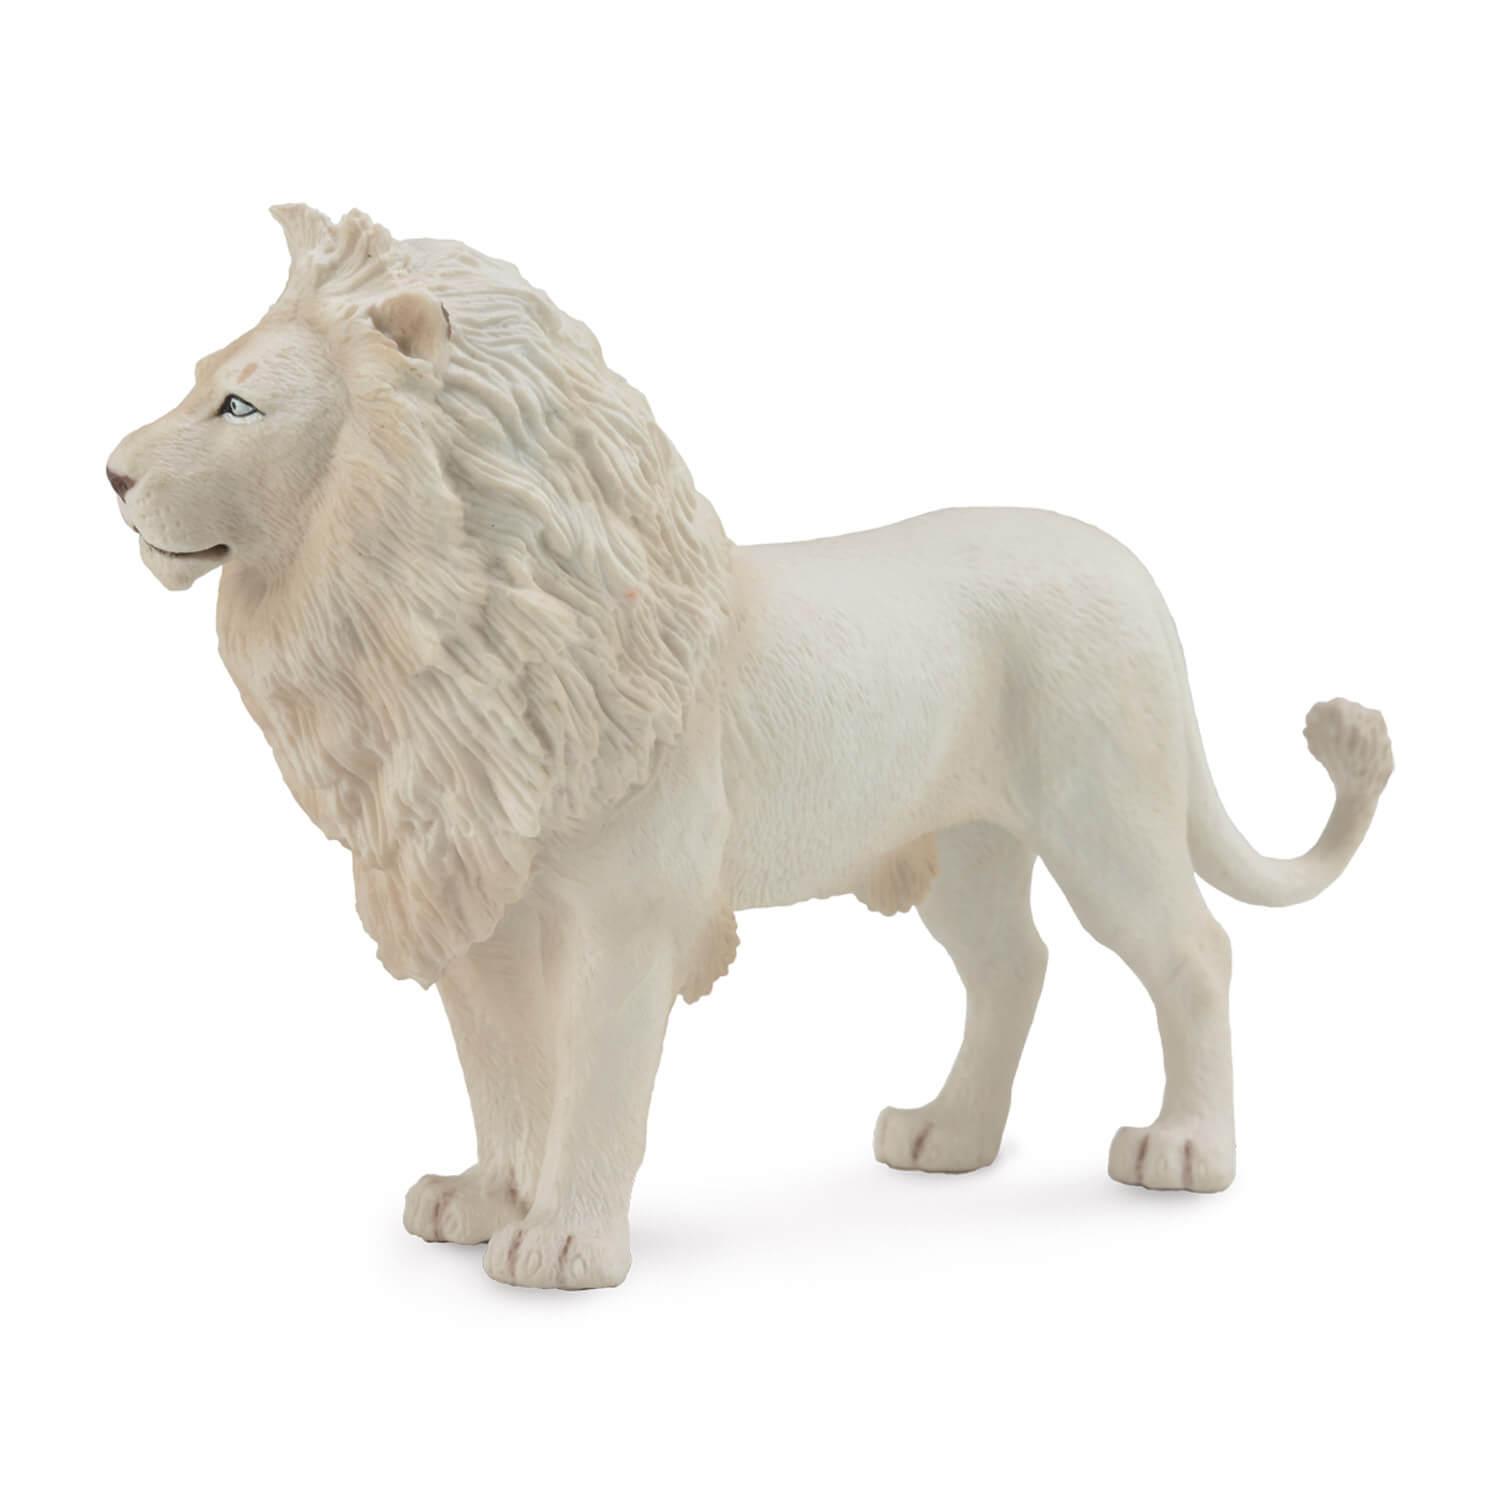 figurineâ animauxâ sauvages (l):â lionâ blanc